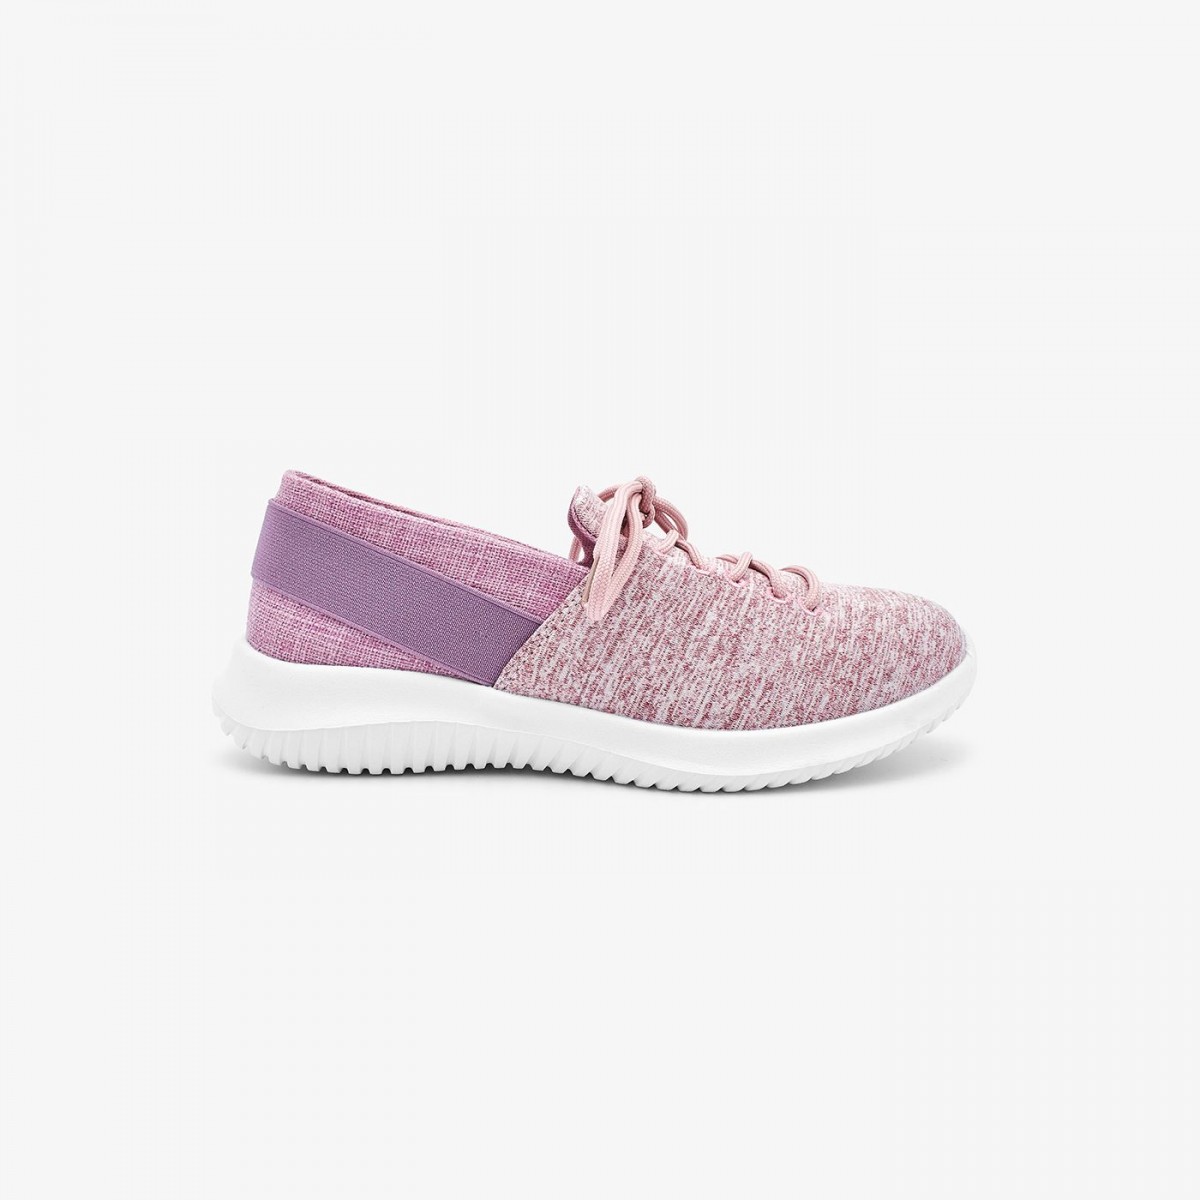 /2019/08/reeva-women-textured-sneakers-rv-sm-0450-purple-image2.jpeg